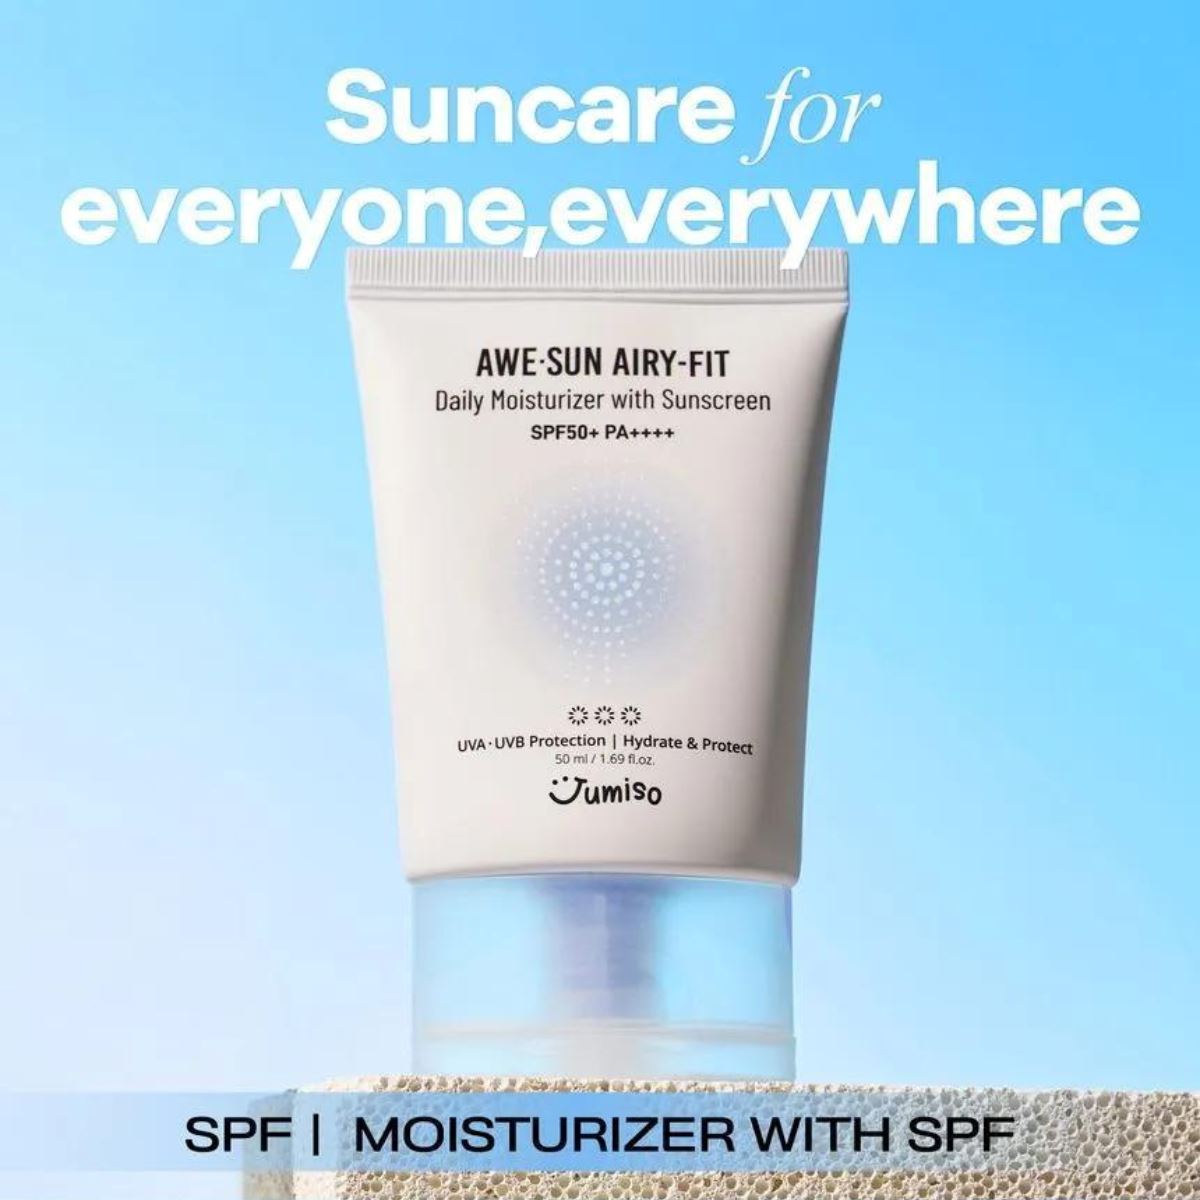 JUMISO Awe-Sun Airy-fit Daily Moisturizer with Sunscreen SPF50+ PA++++ 50ml Skin Care JUMISO ORION XO Sri Lanka